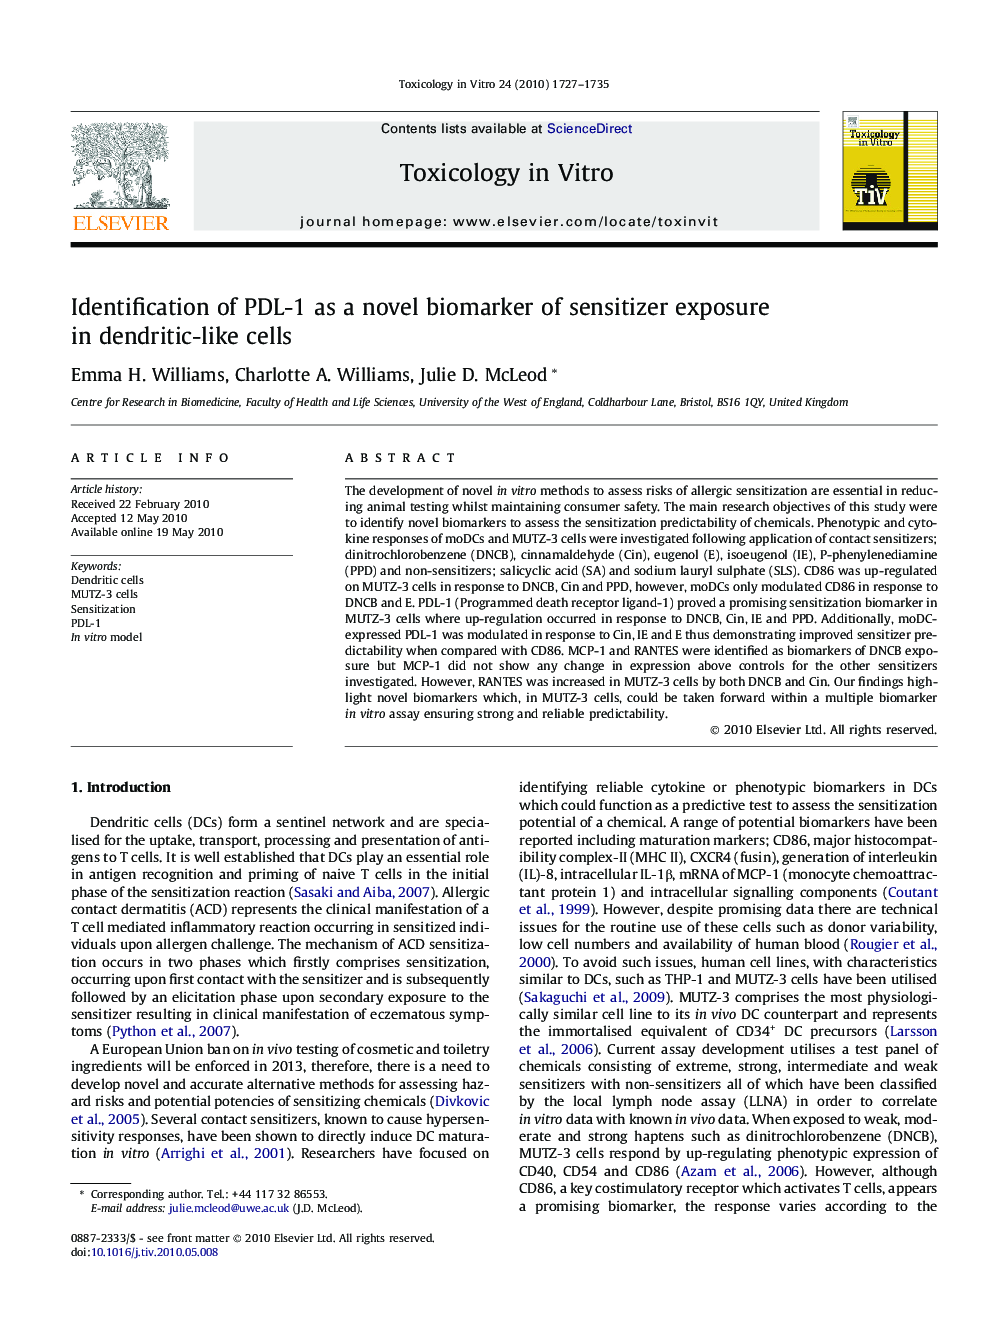 Identification of PDL-1 as a novel biomarker of sensitizer exposure in dendritic-like cells